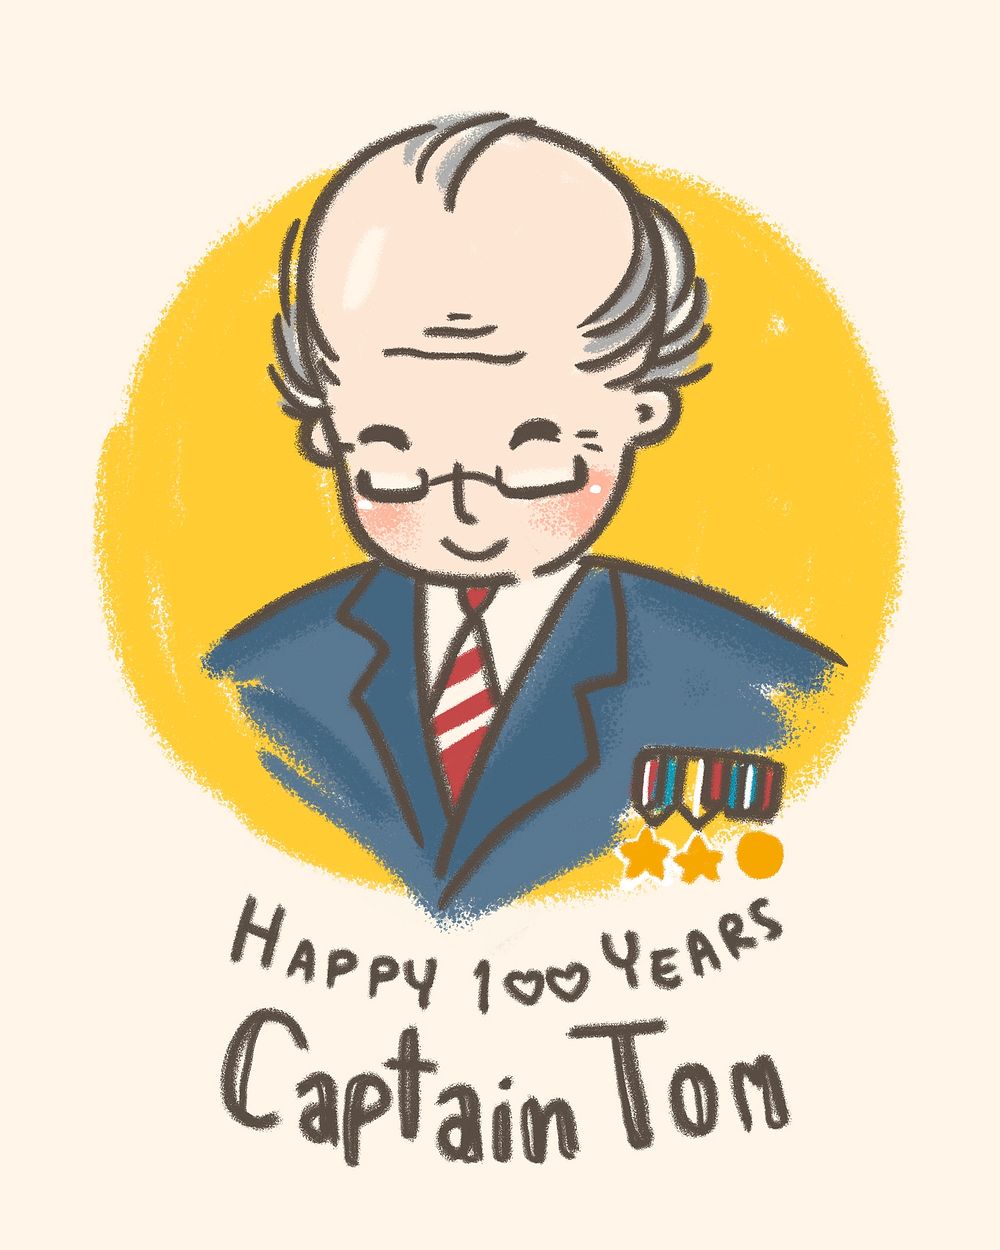 HAPPY 100th CAPTAIN TOM